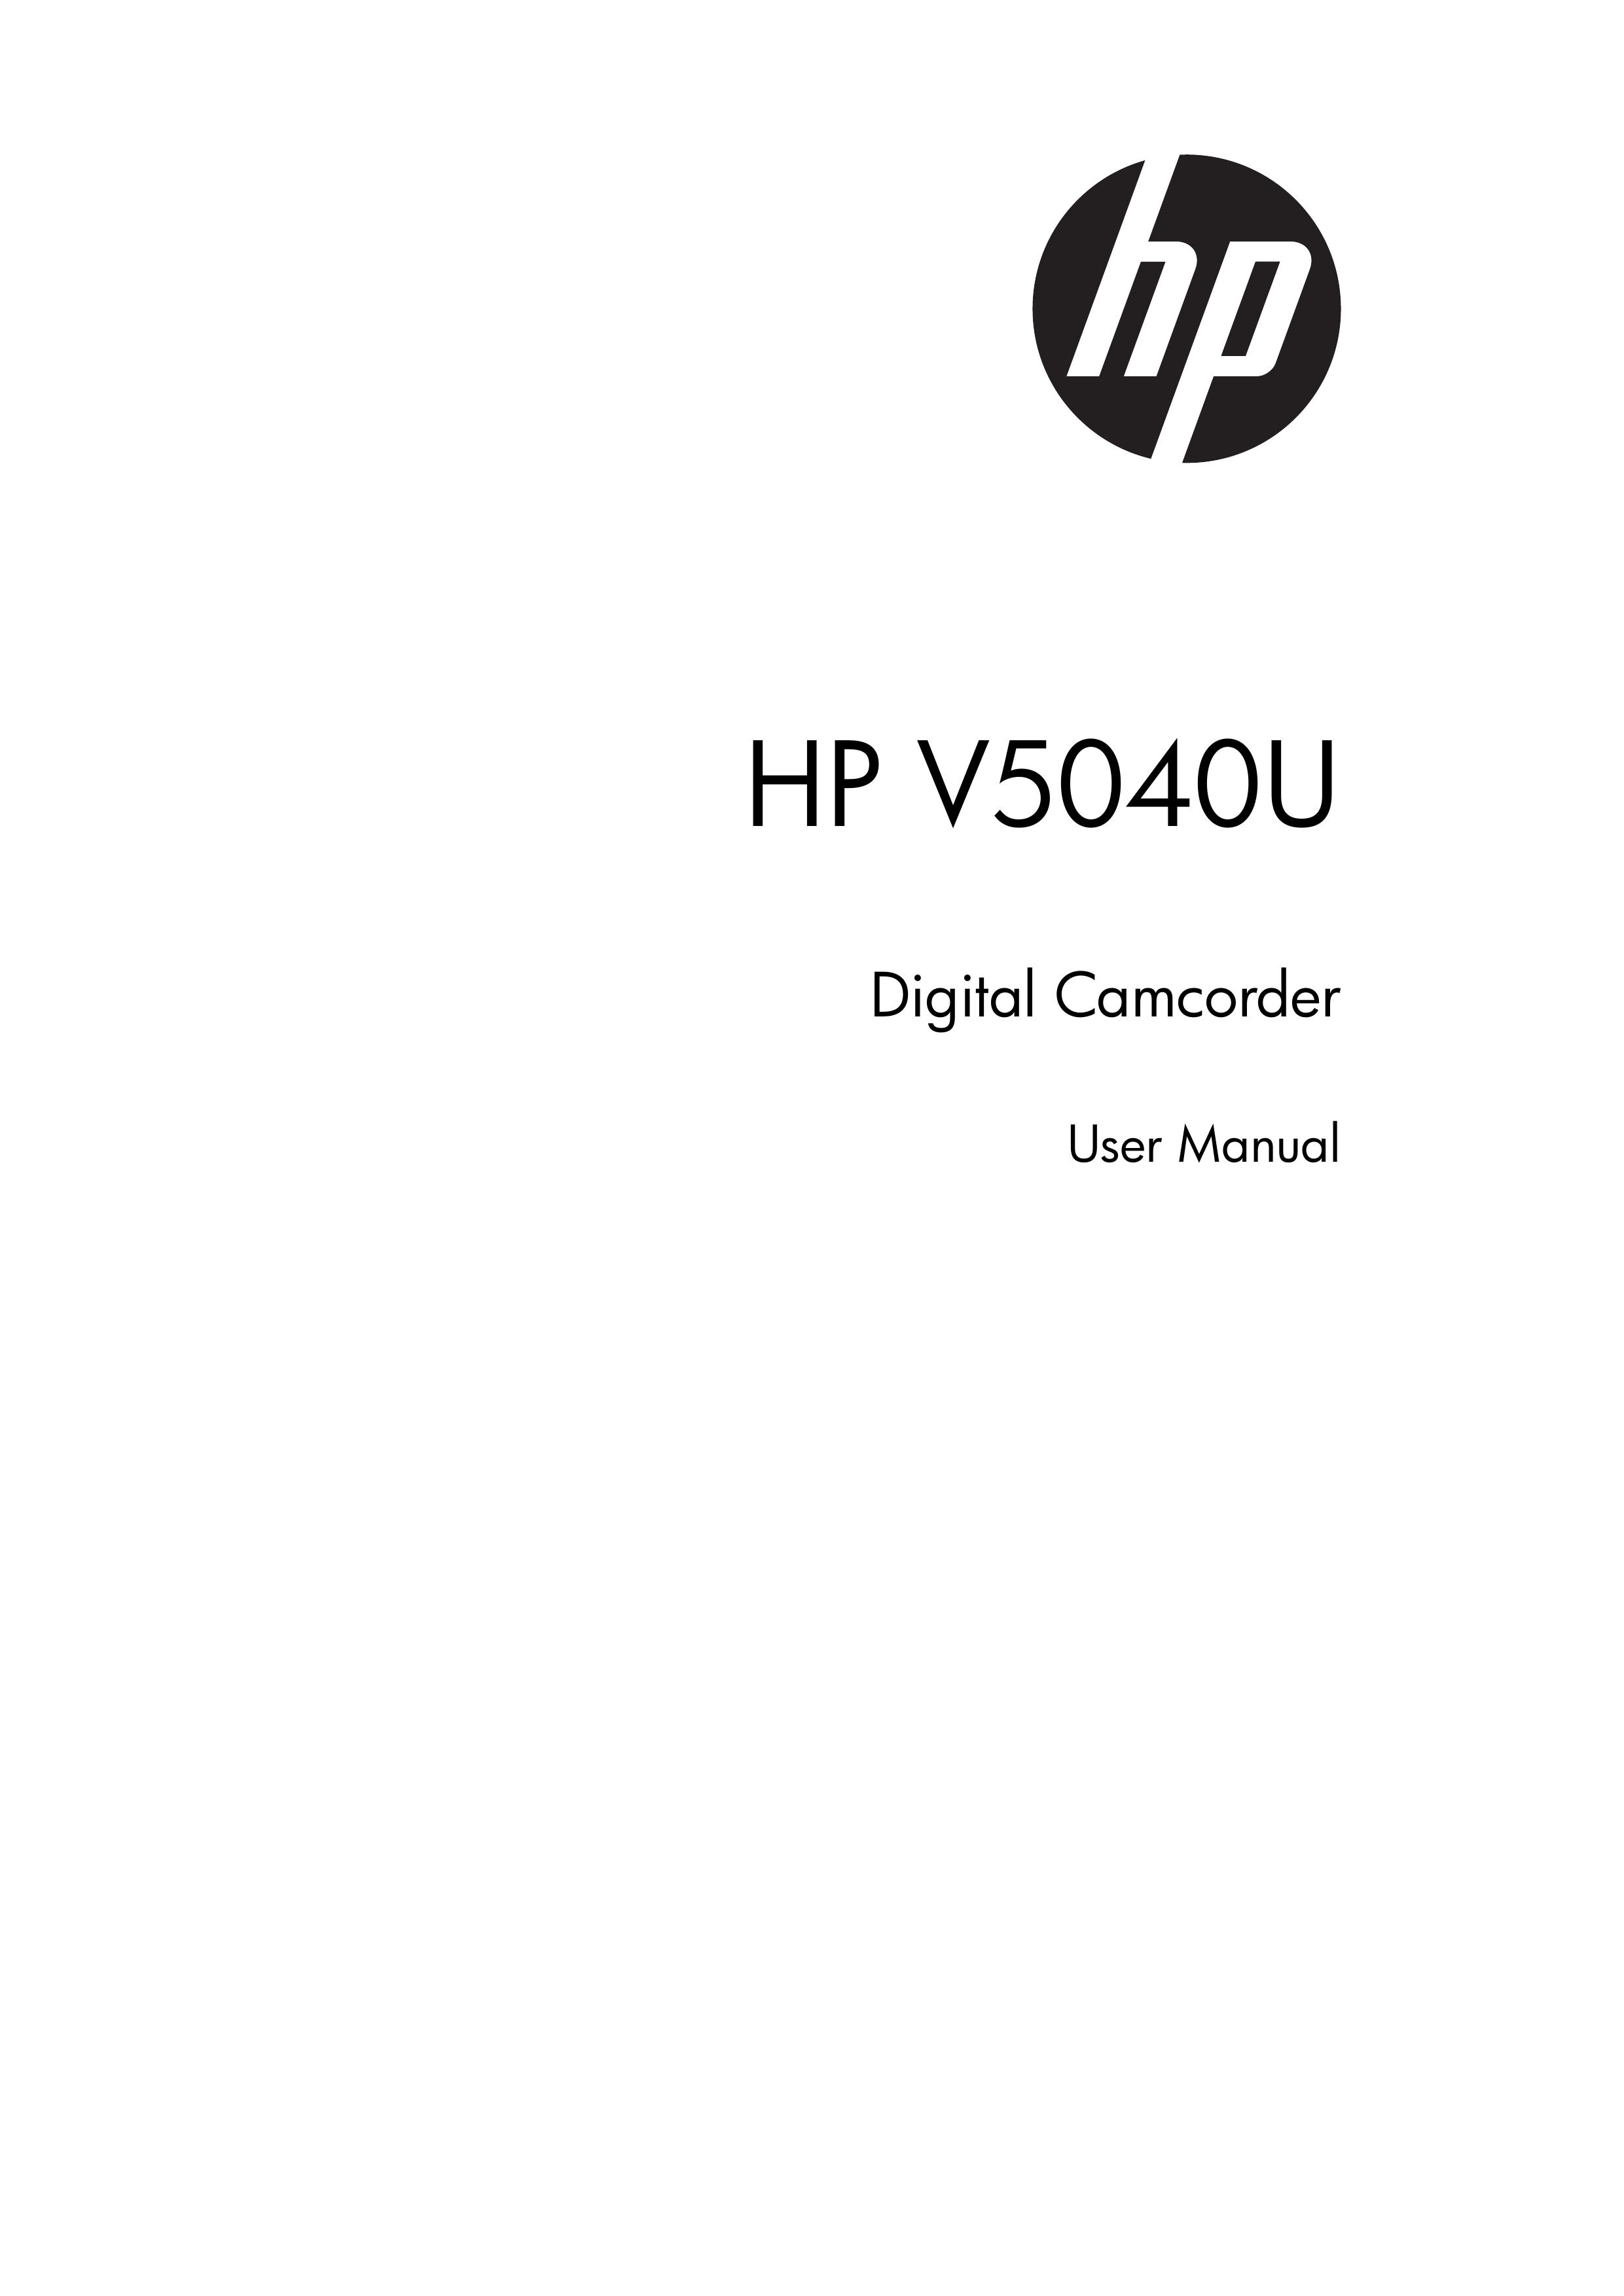 HP (Hewlett-Packard) V5040u Camcorder User Manual